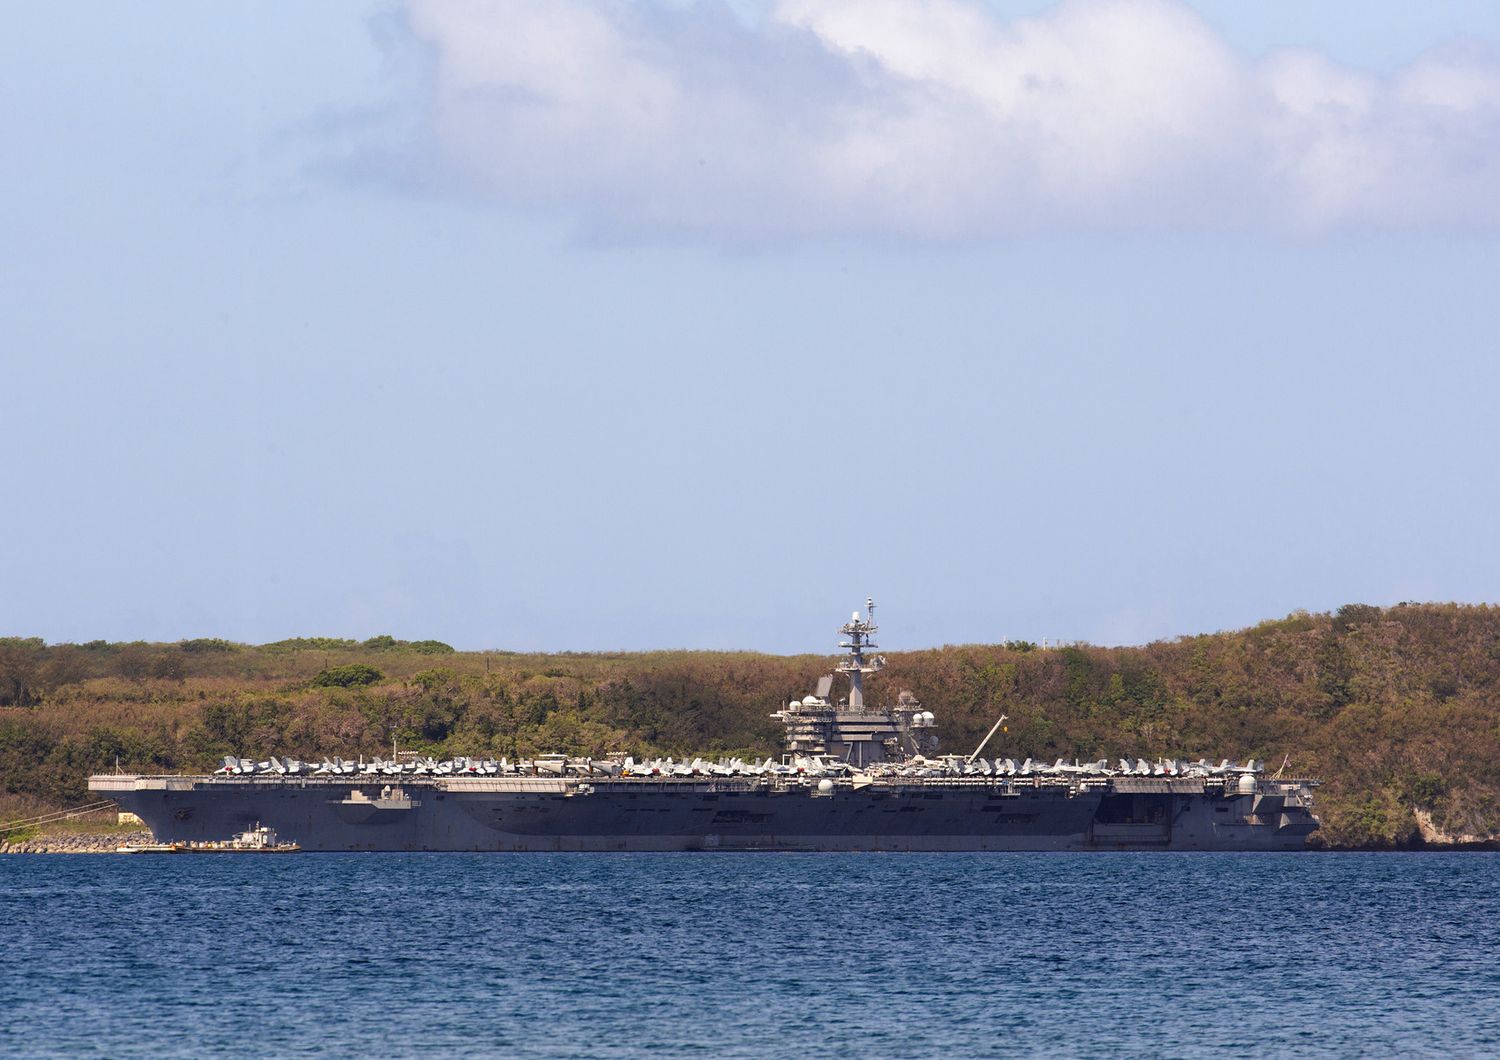 La portaerei americana USS Roosevelt ormeggiata a Guam